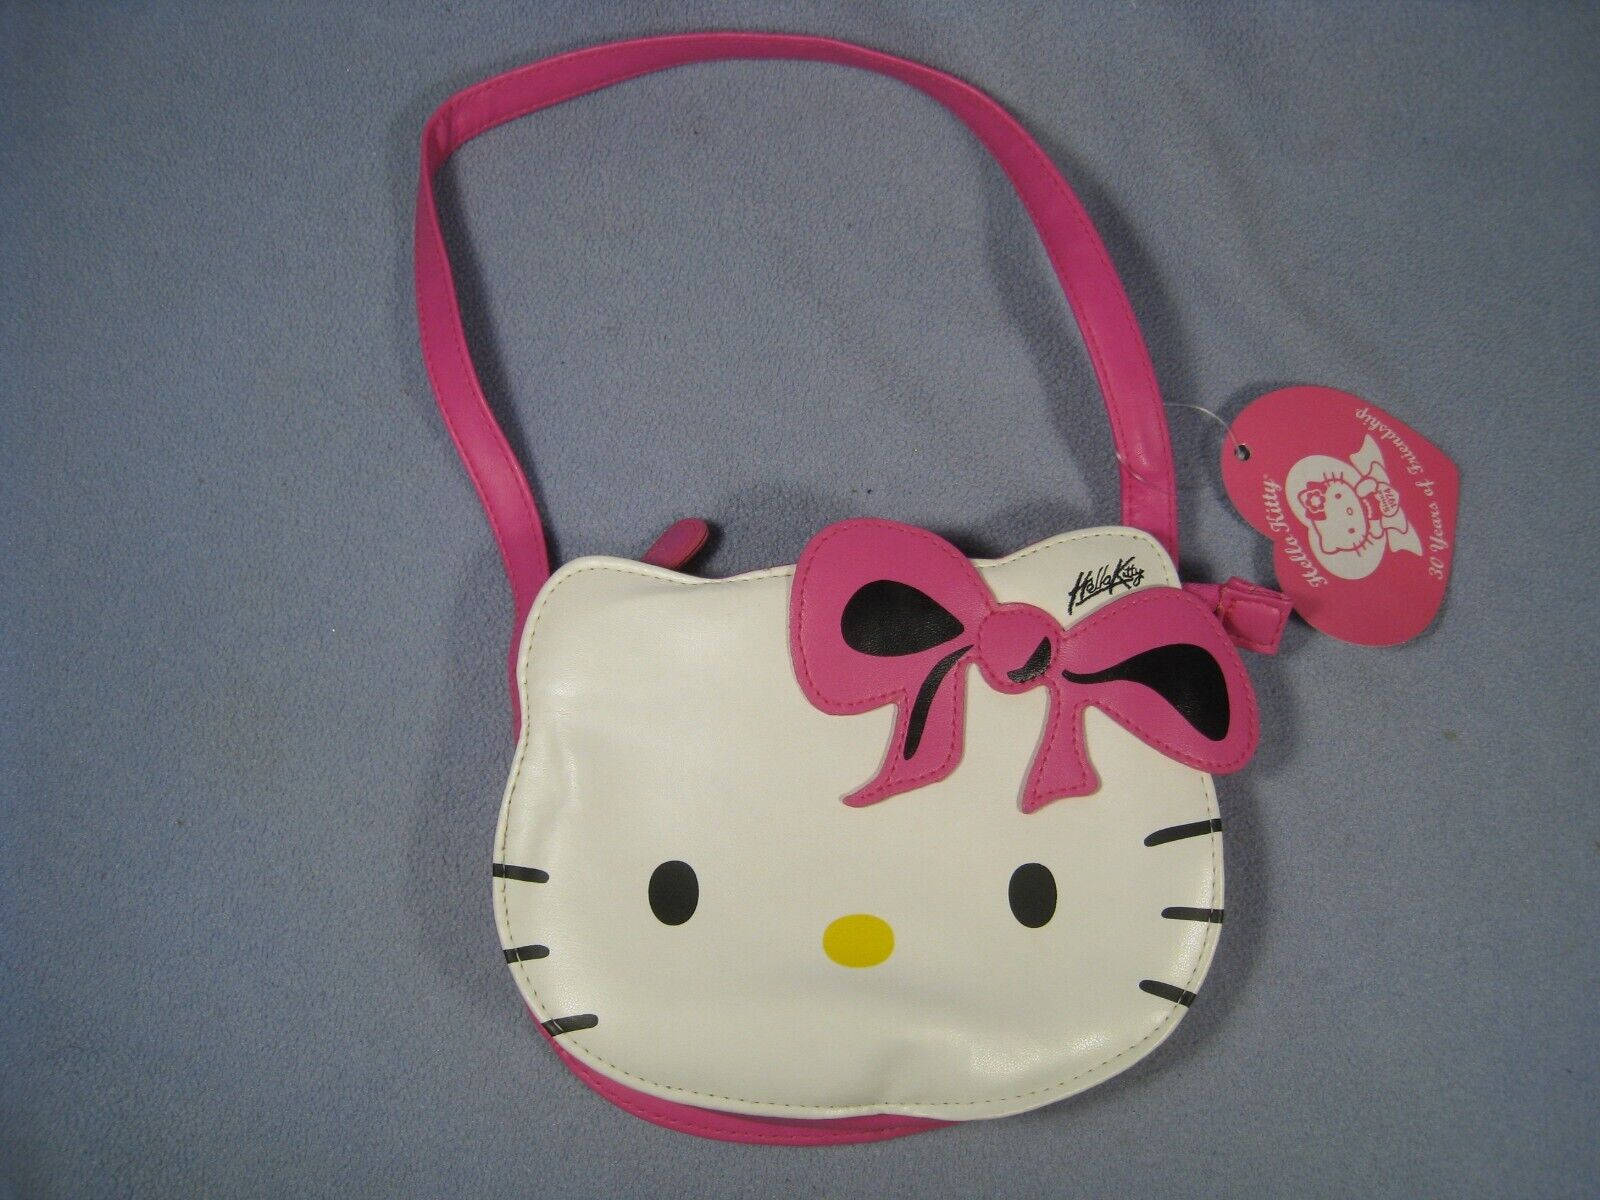 New 2004 Sanrio Hello Kitty Leather Purse/ Bag with Bonus